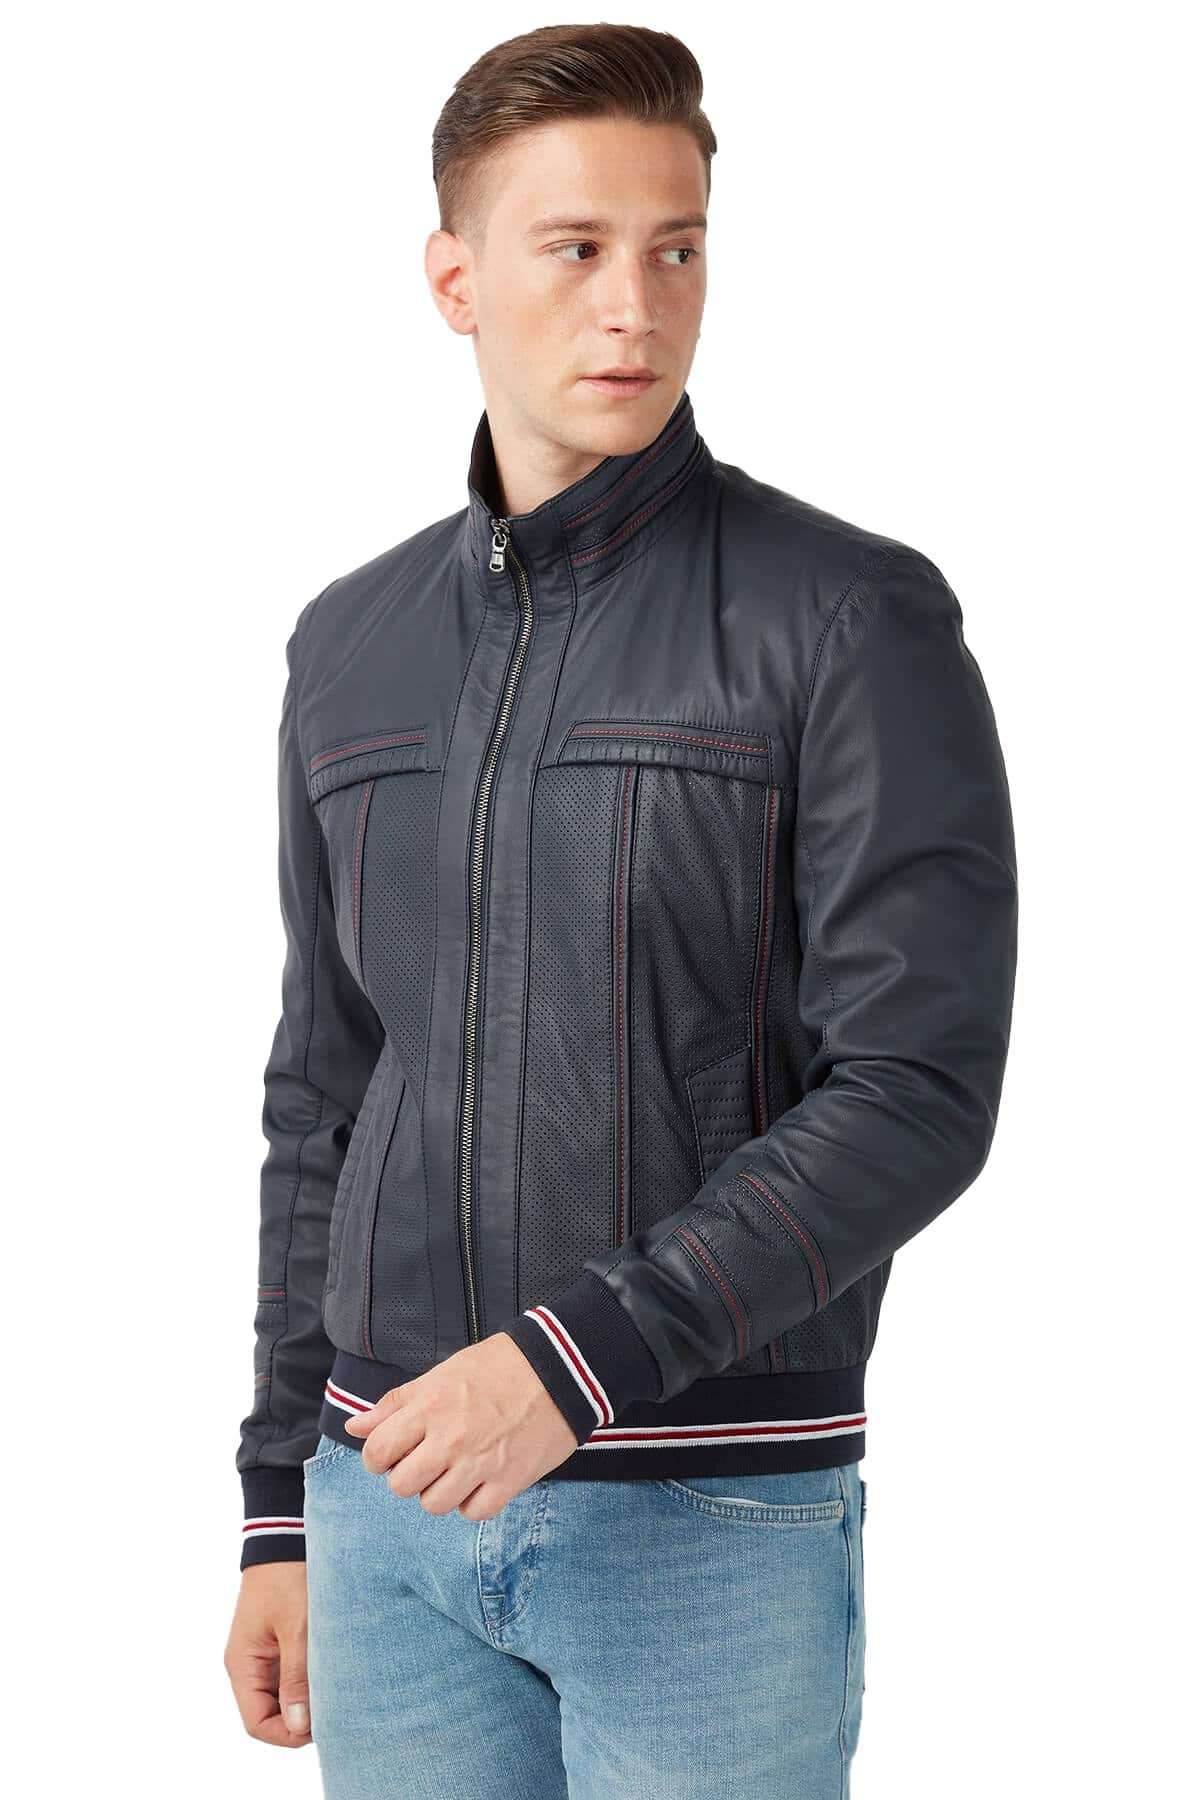 Wilfred Men's 100 % Real Navy-Blue Leather Taffeta Garnished Jacket